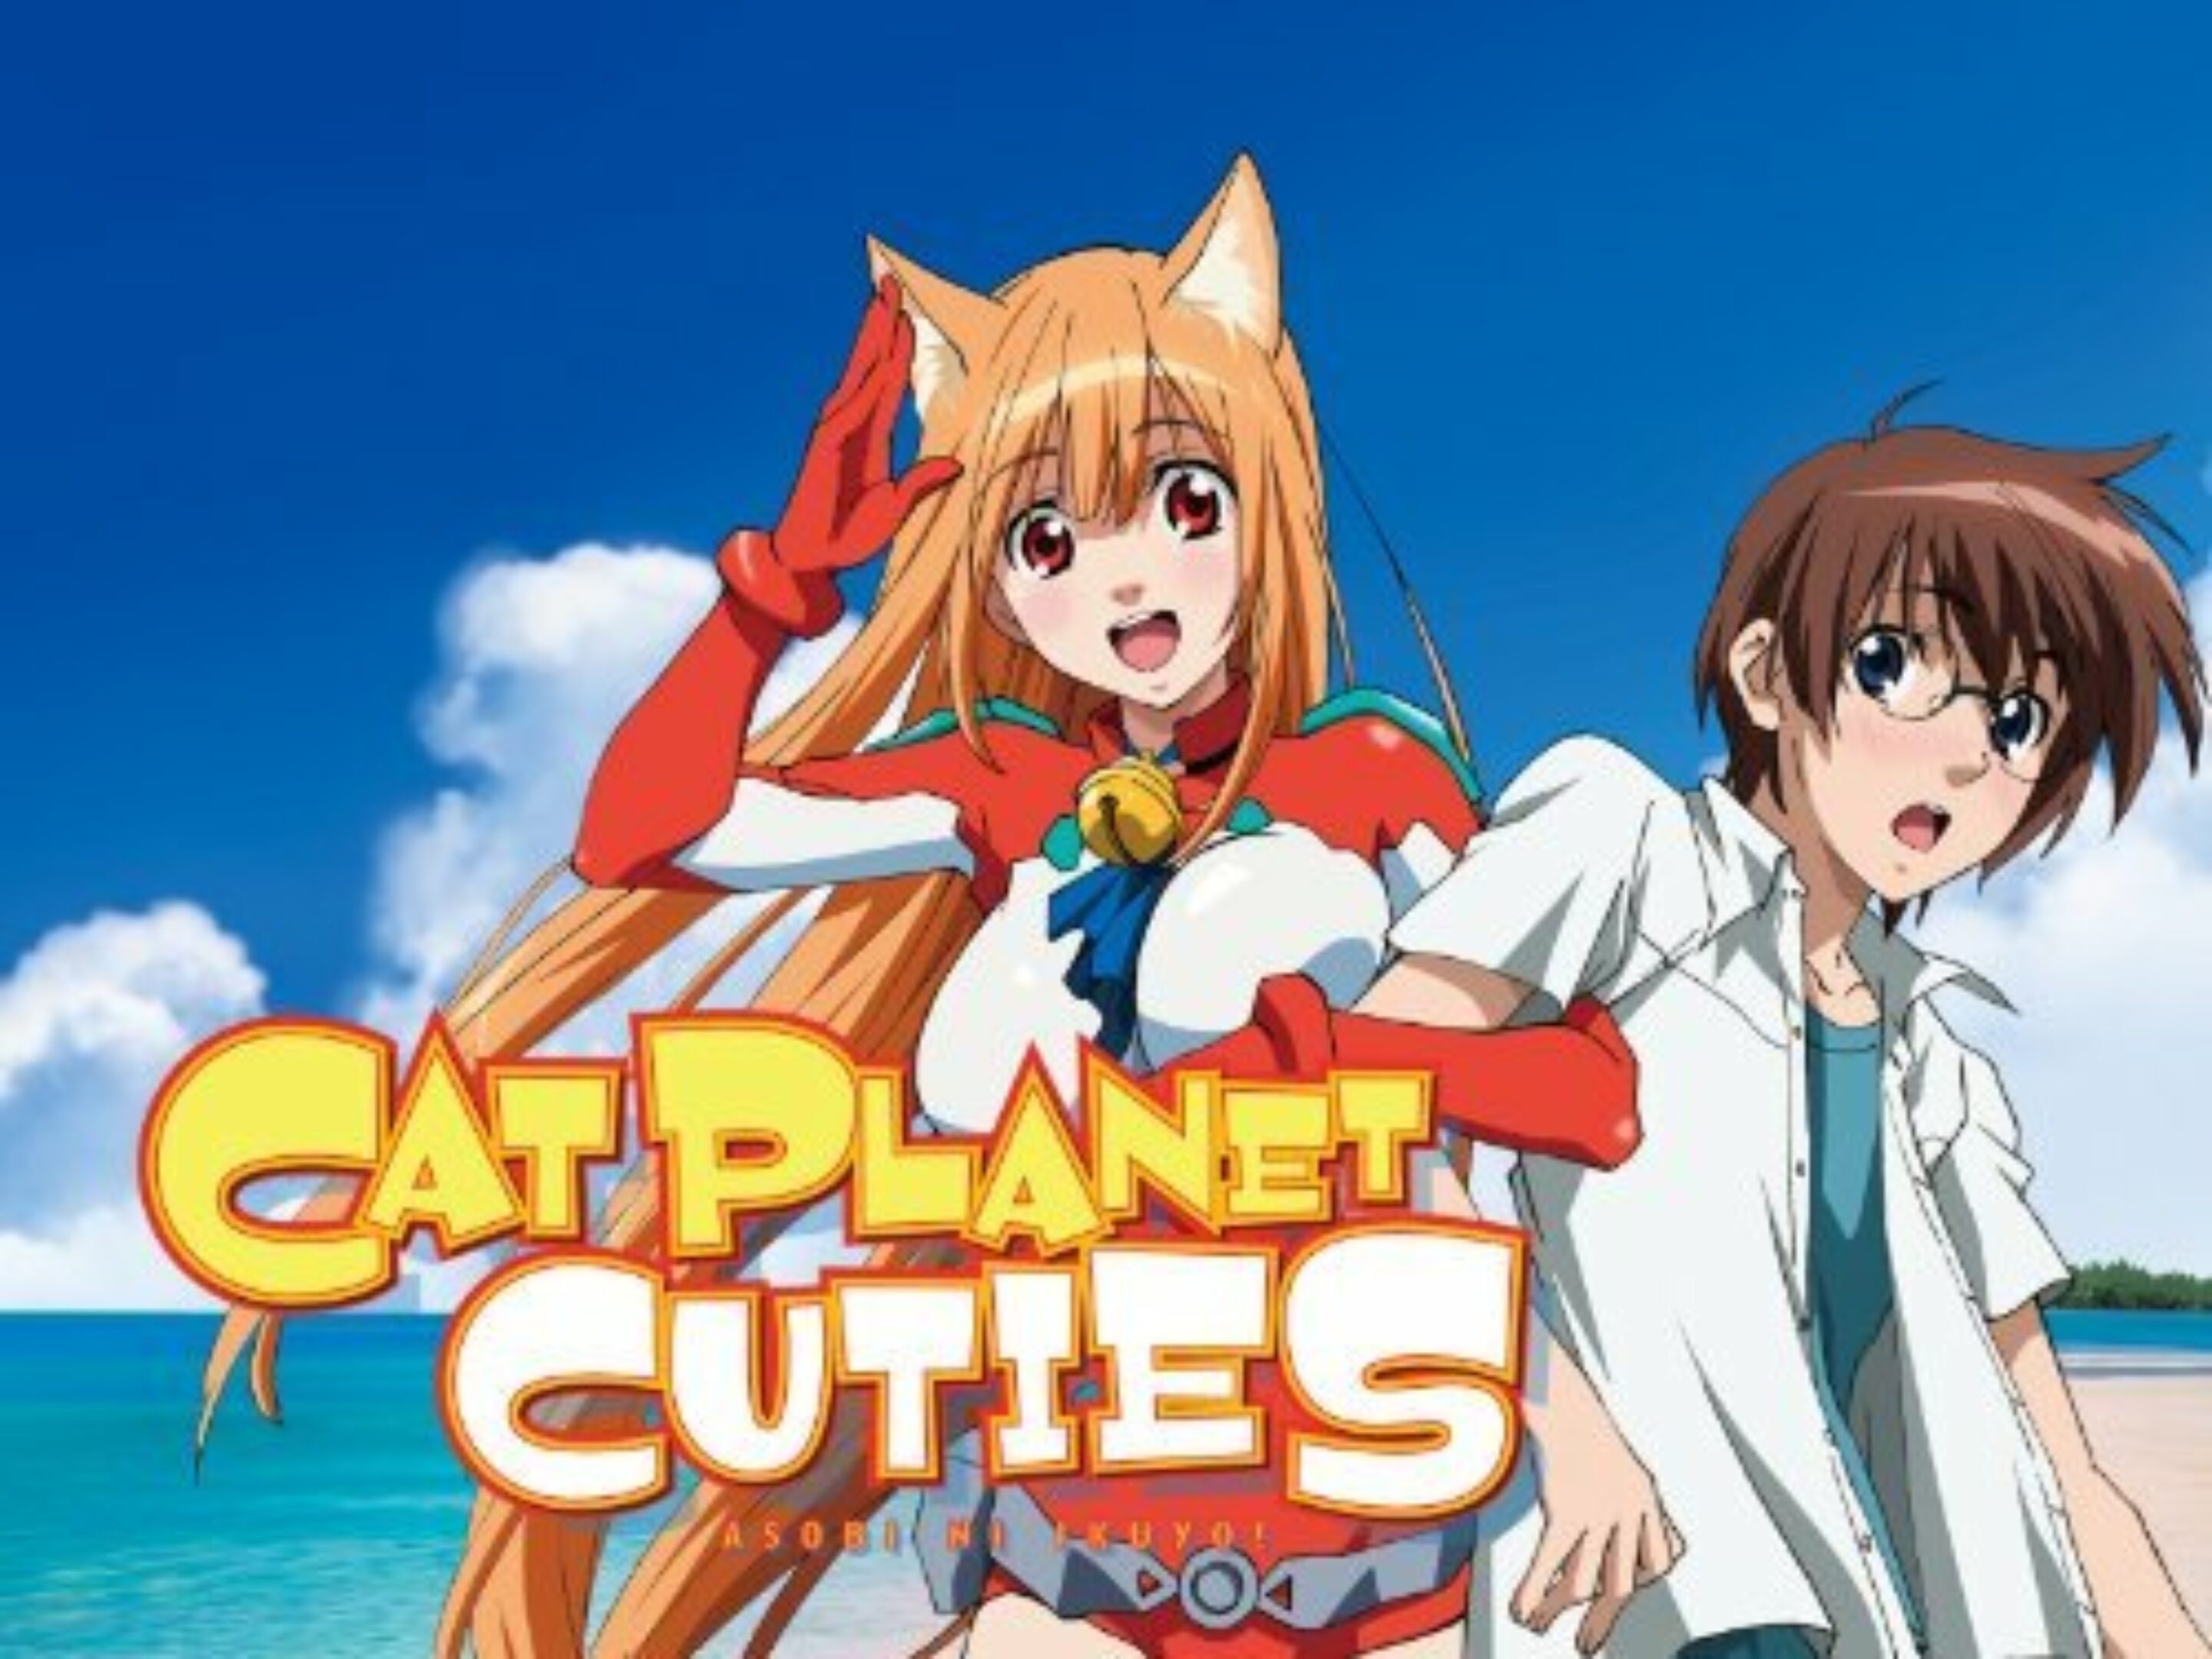 Cat Planet Cuties Dubbed lafayette swedena